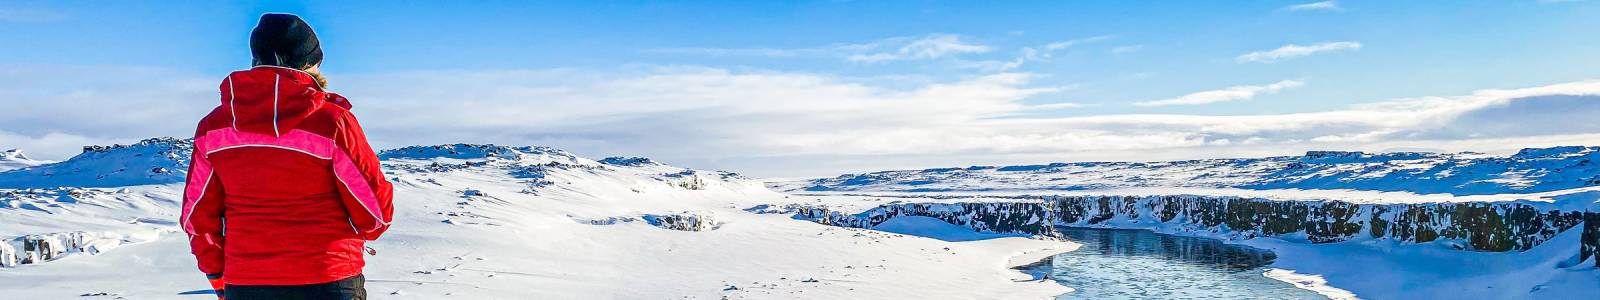 Sneeuwschoenwandelen in Ijsland